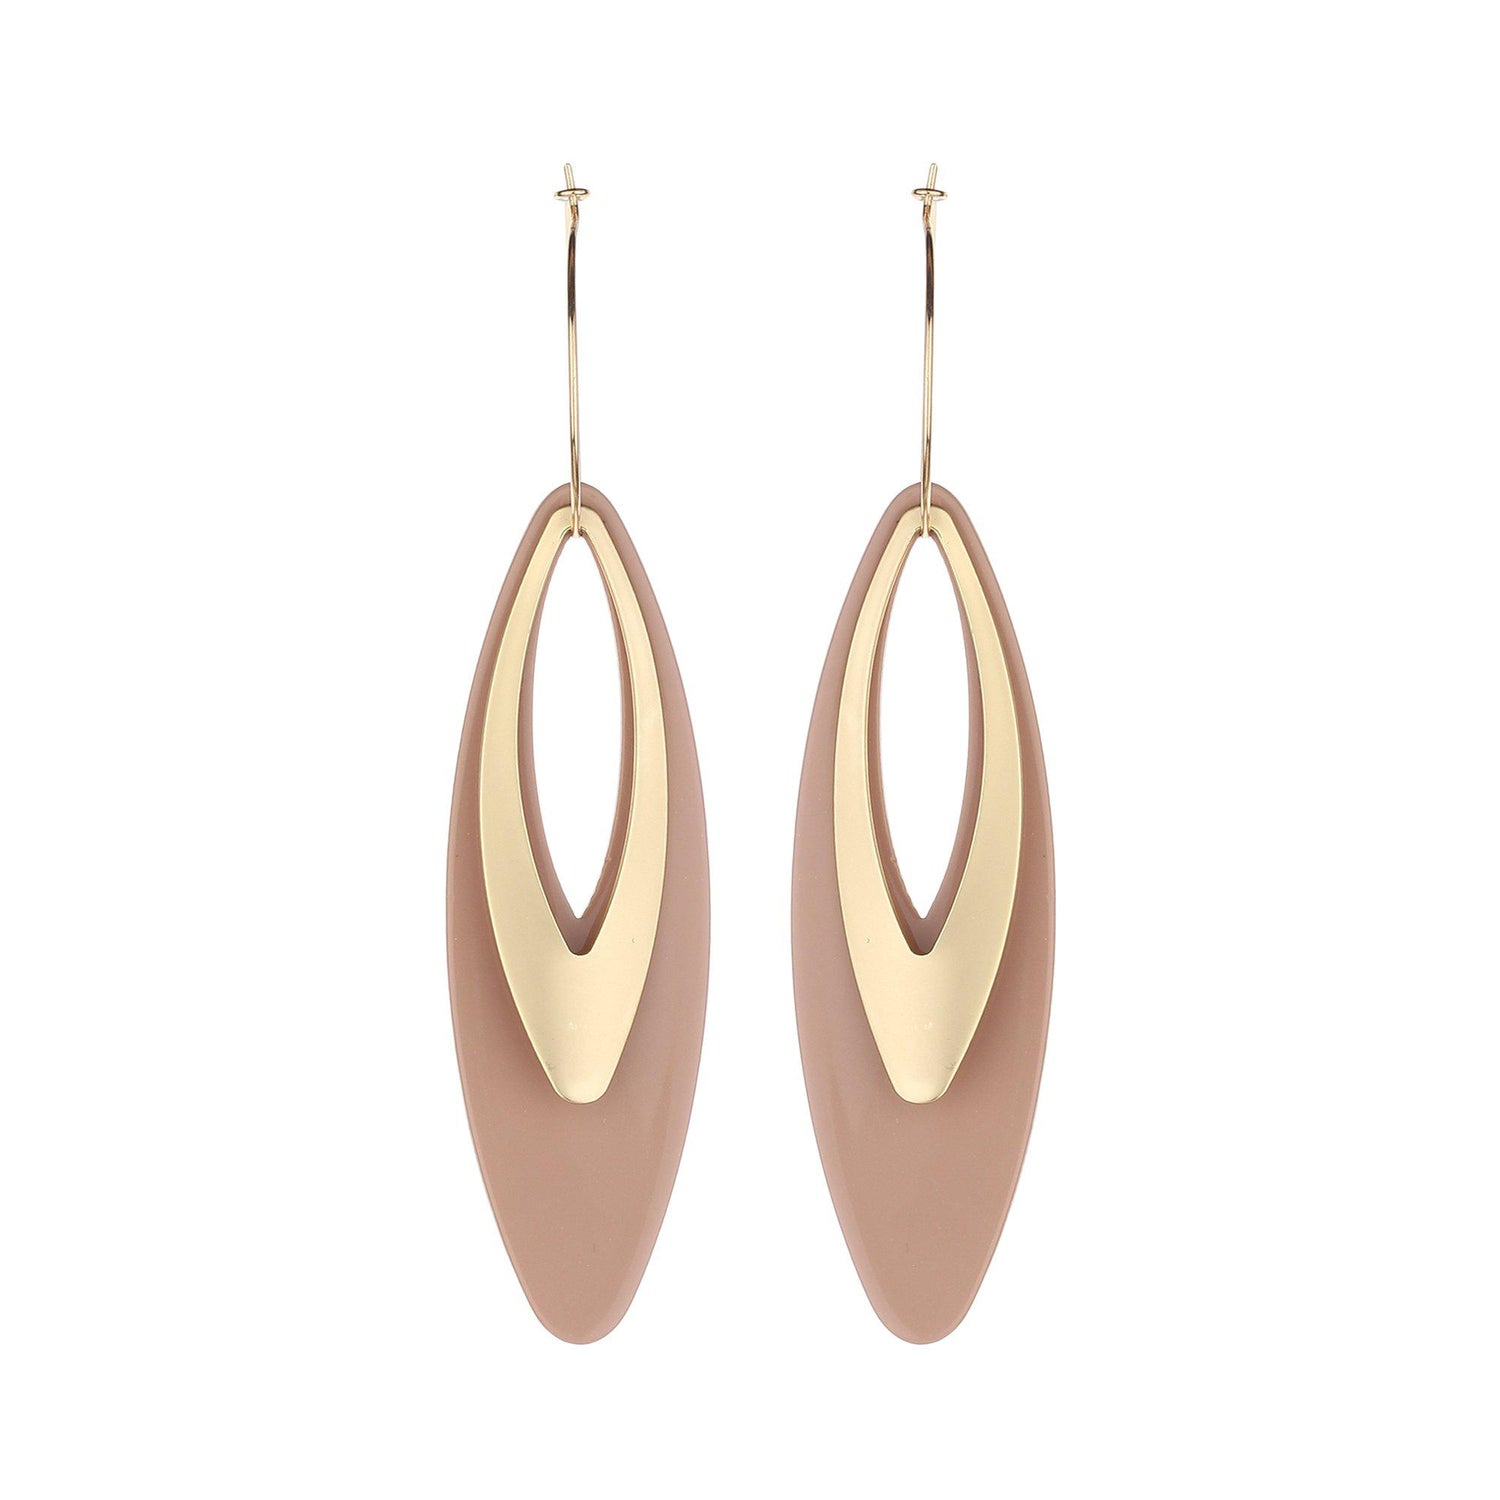 Designer Oval Shape Earrings-Earrings-ONESKYSHOP